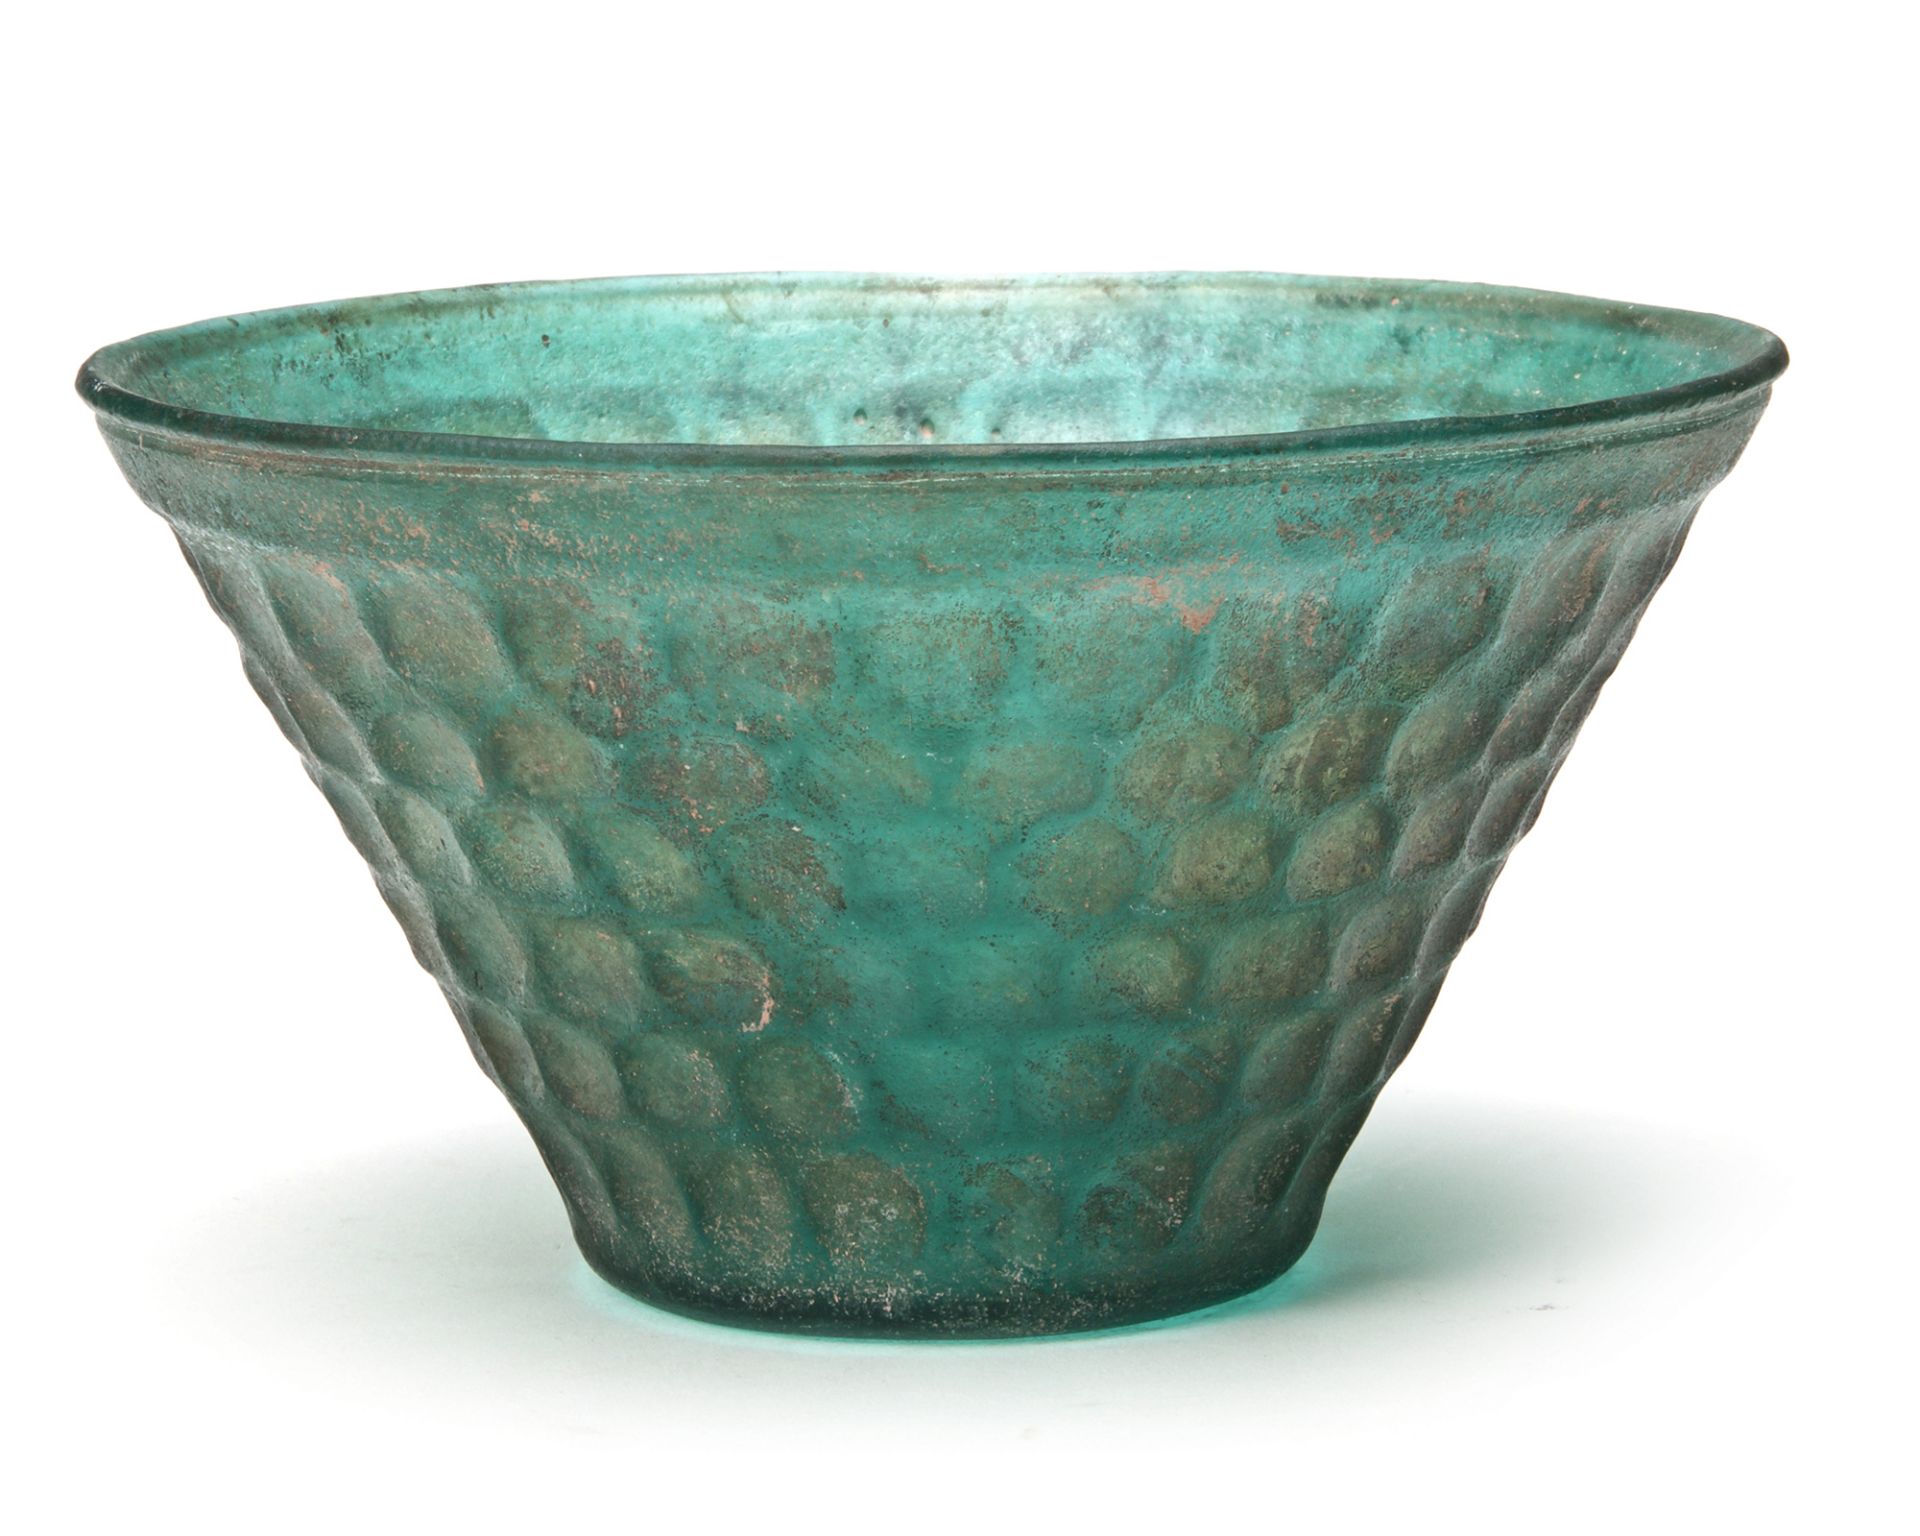 A PERSIAN GREEN CUT GLASS BOWL, 8TH-9TH CENTURY